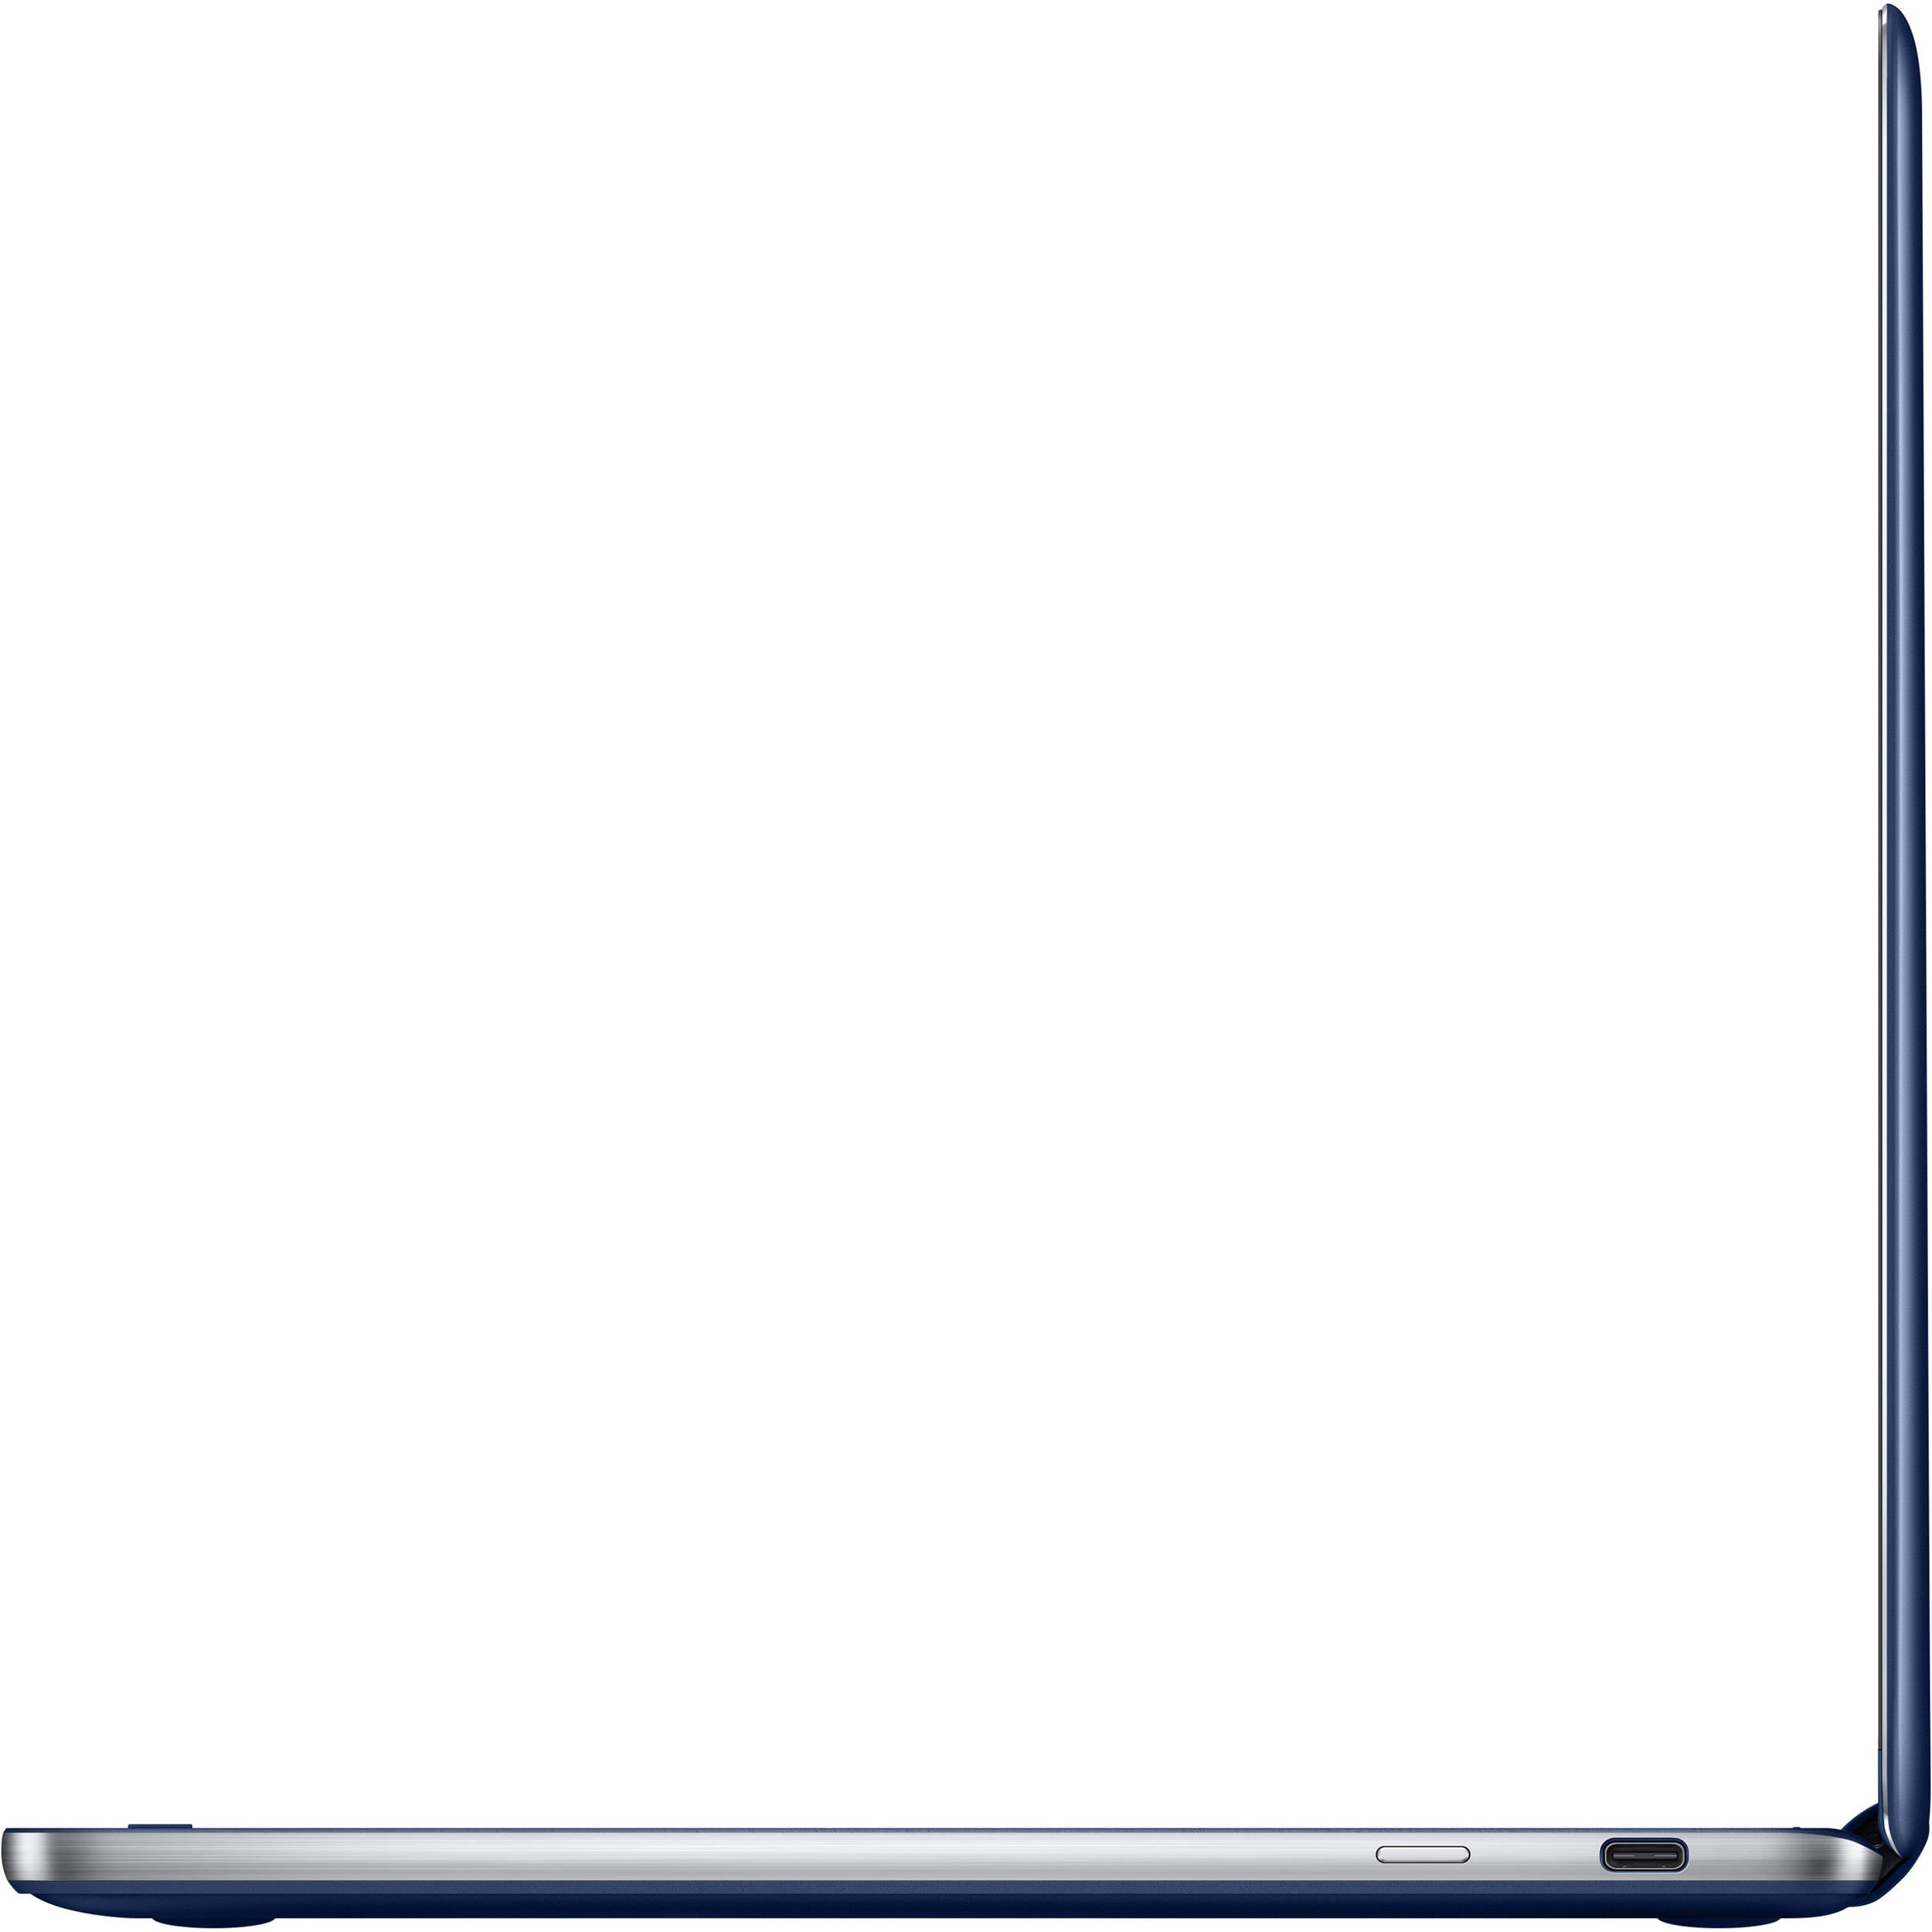 Samsung NP950SBE-X01US-RB Notebook 9 Pen 15" FHD i7-8565U 16GB 1TB W10H, Blue - Certified Refurbished